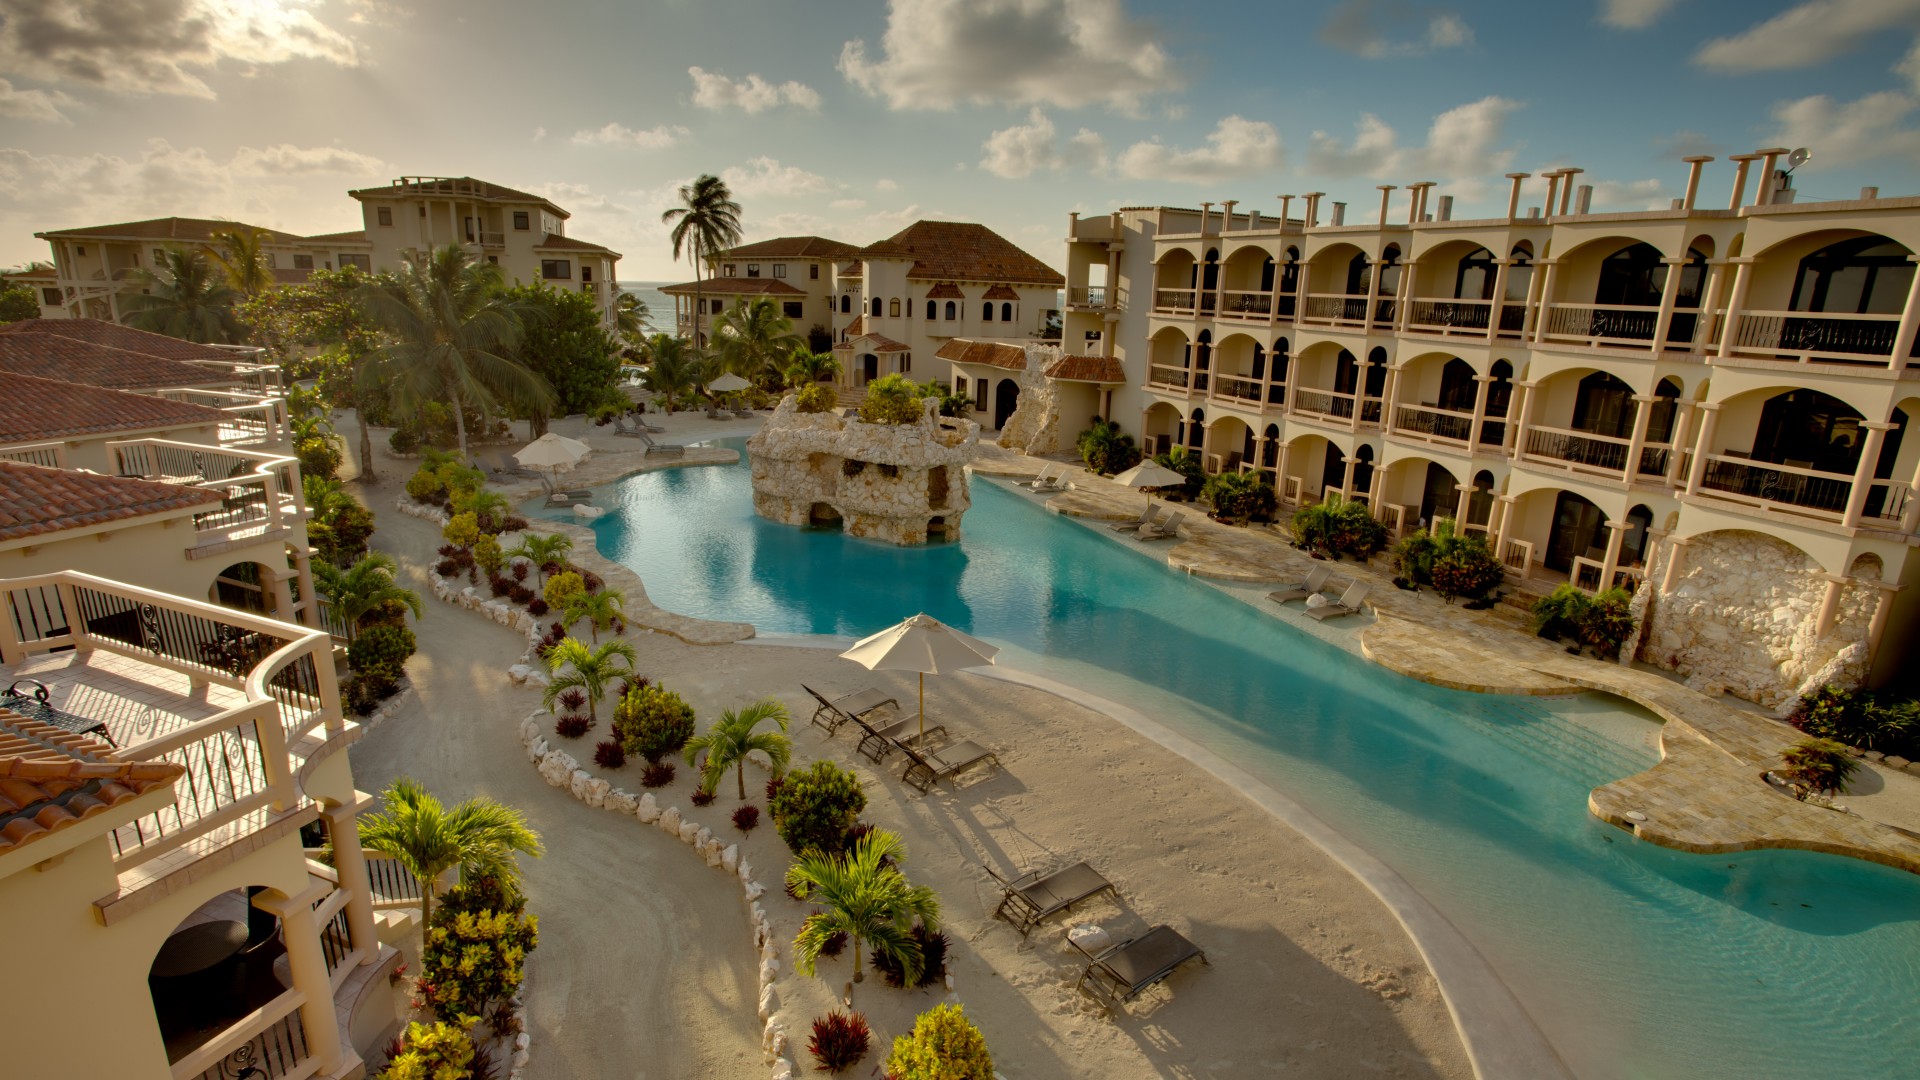 Belize, San Pedro, Hotel, pool, resort, sky, sun, travel, vacation, booking, sunbed (horizontal)